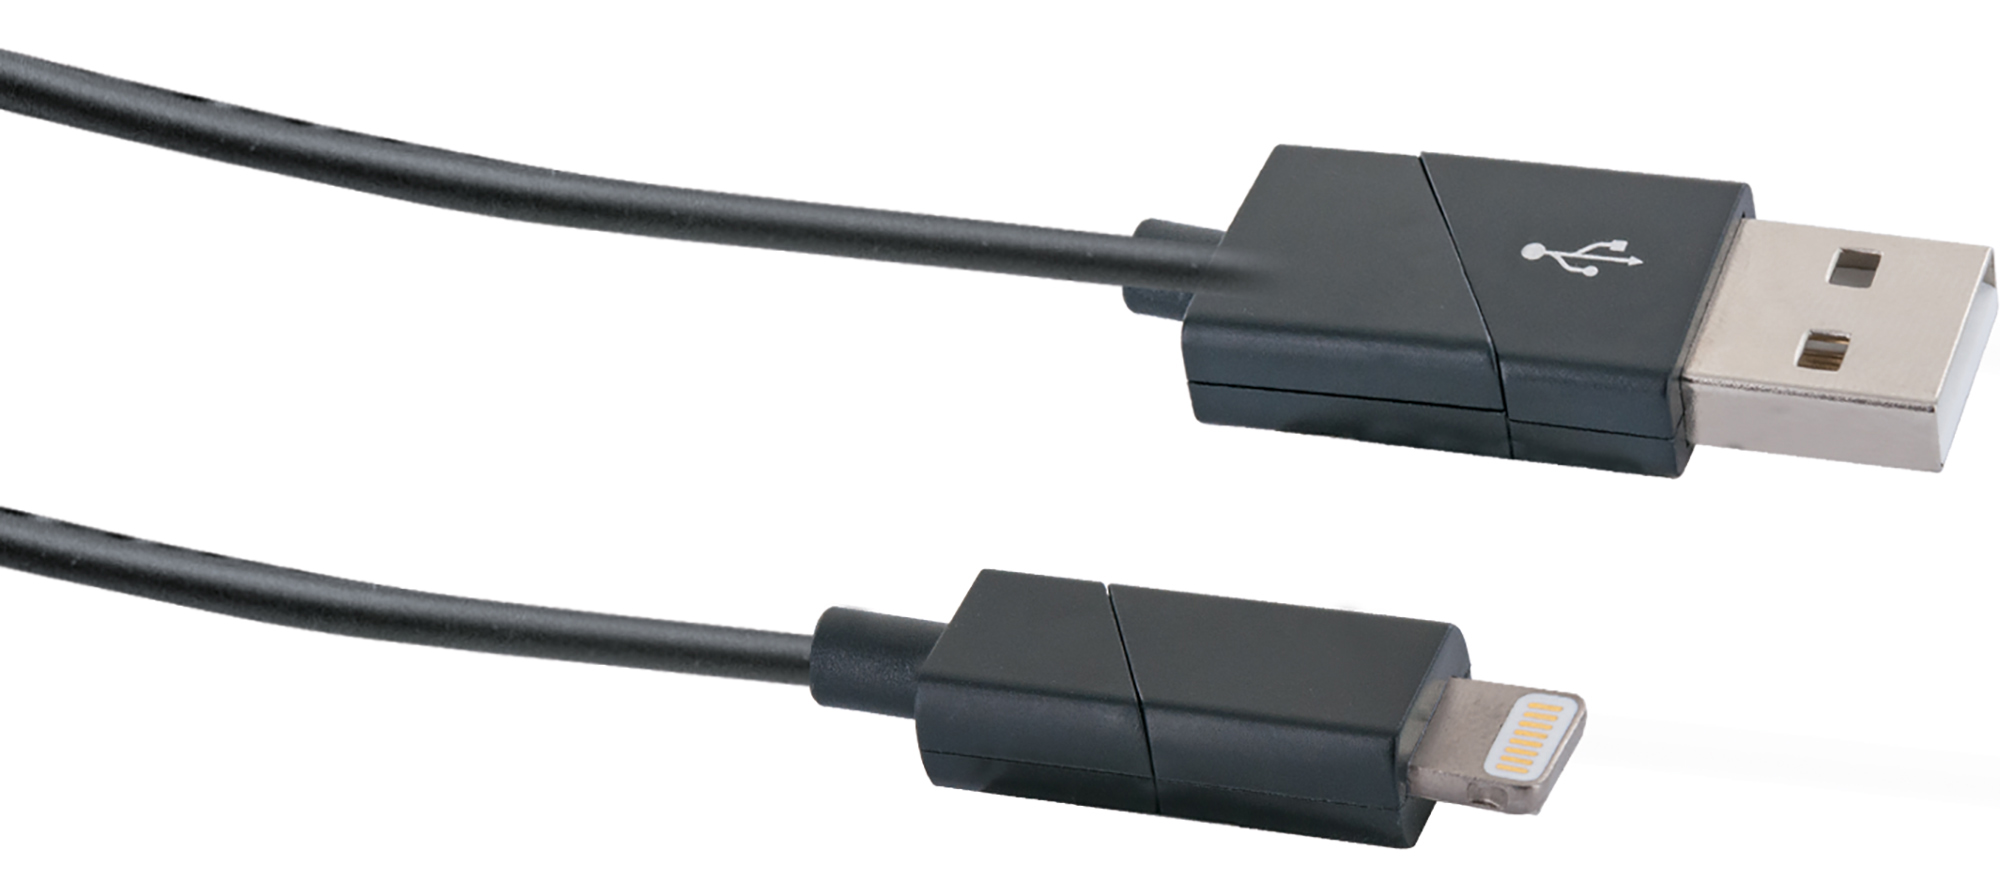 SCHWAIGER -LKW120L 533-, Apple Lightning Ladekabel Schwarz m, Sync Stecker, Apple Lightning & USB 1,2 A zu drehbar Stecker 2.0